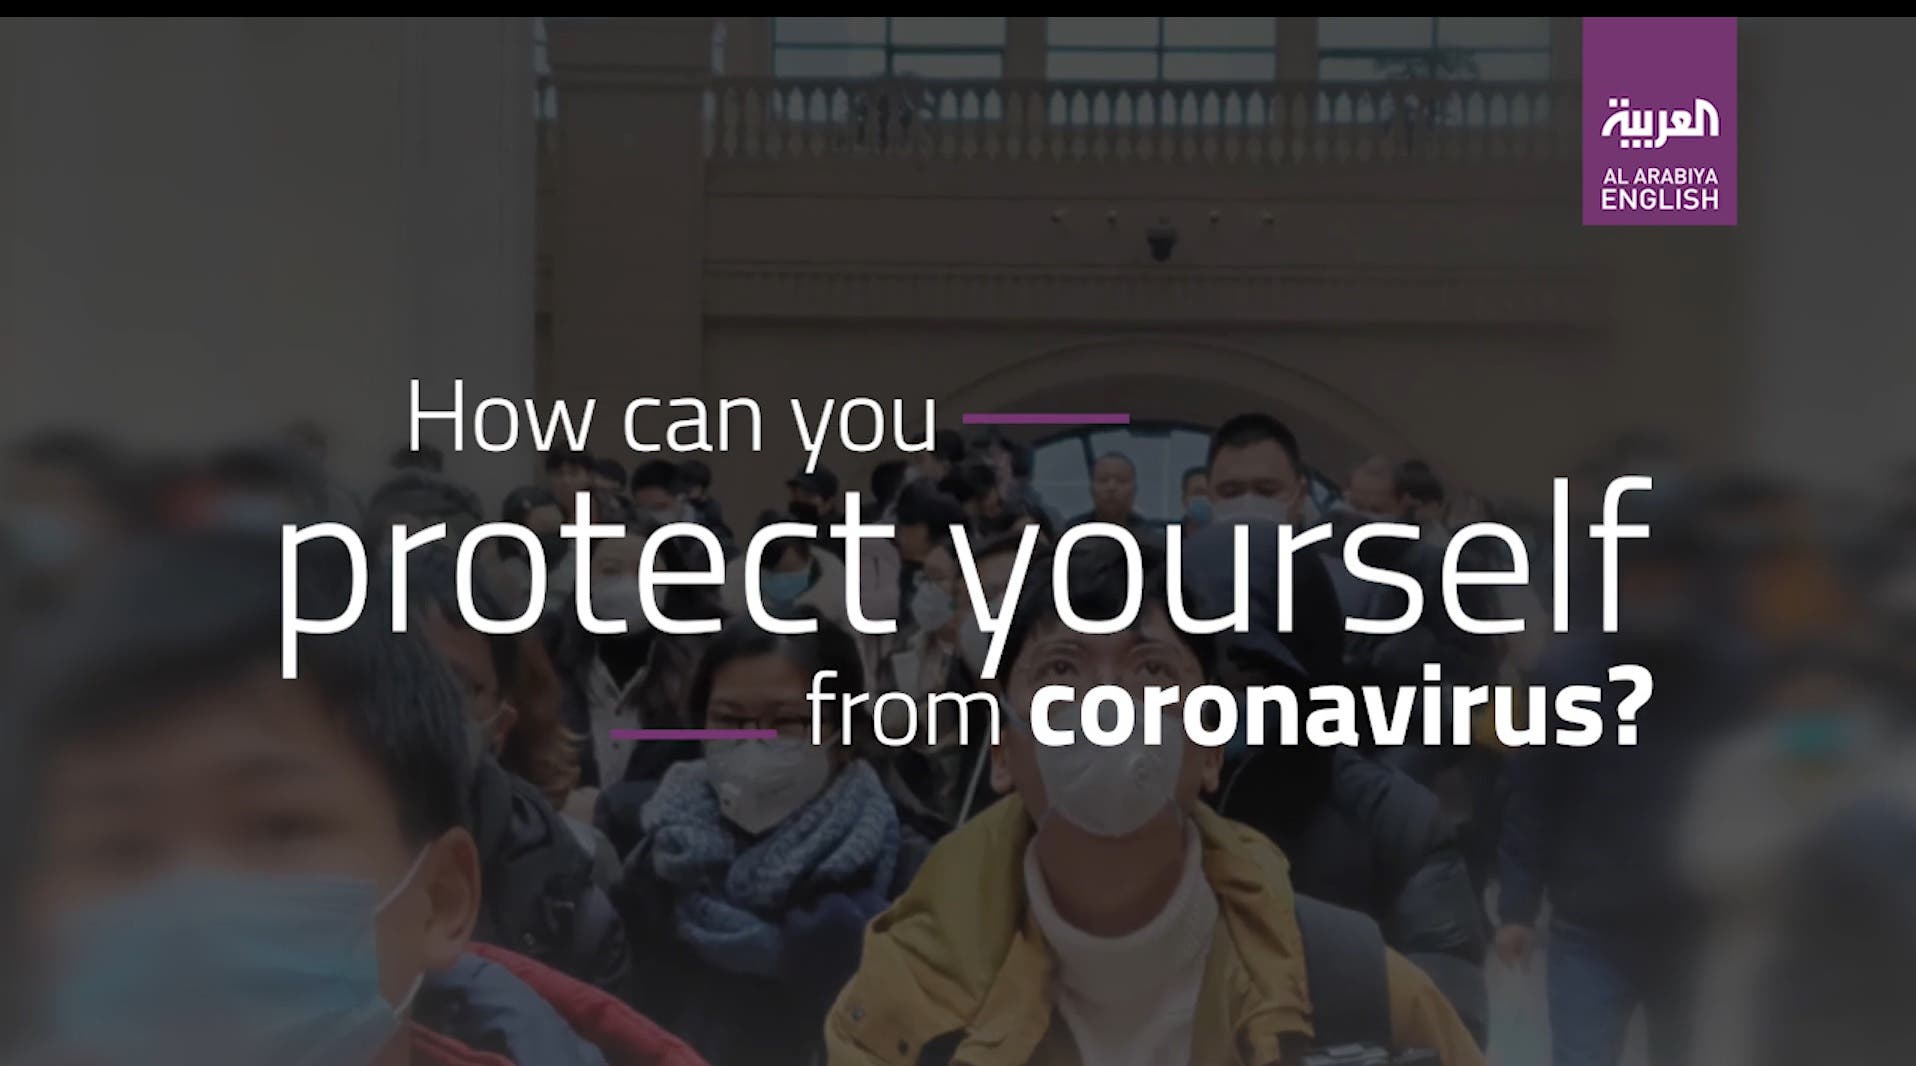 protect yourself coronavirus video thumb